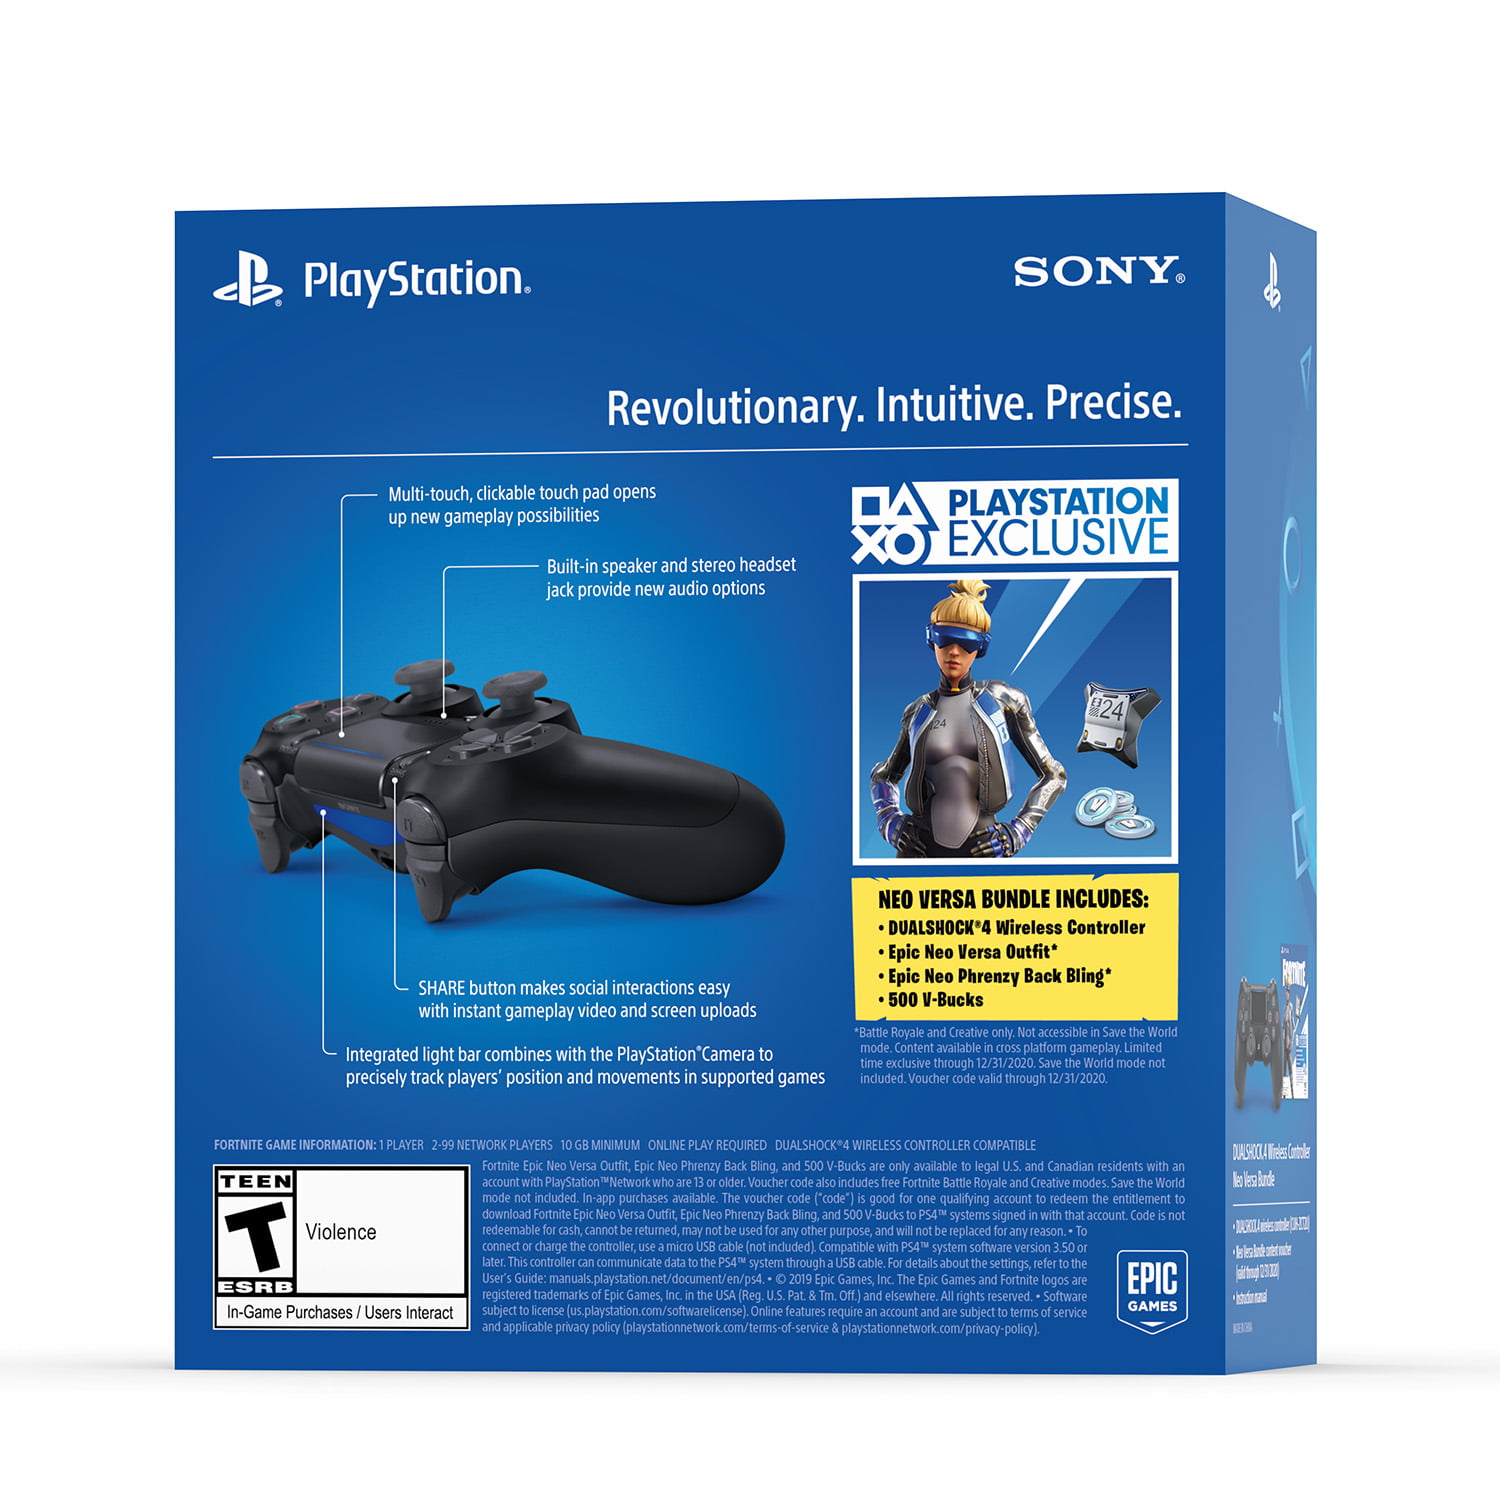 Sony PS4 DualShock Controller+Fortnite Voucher Blue